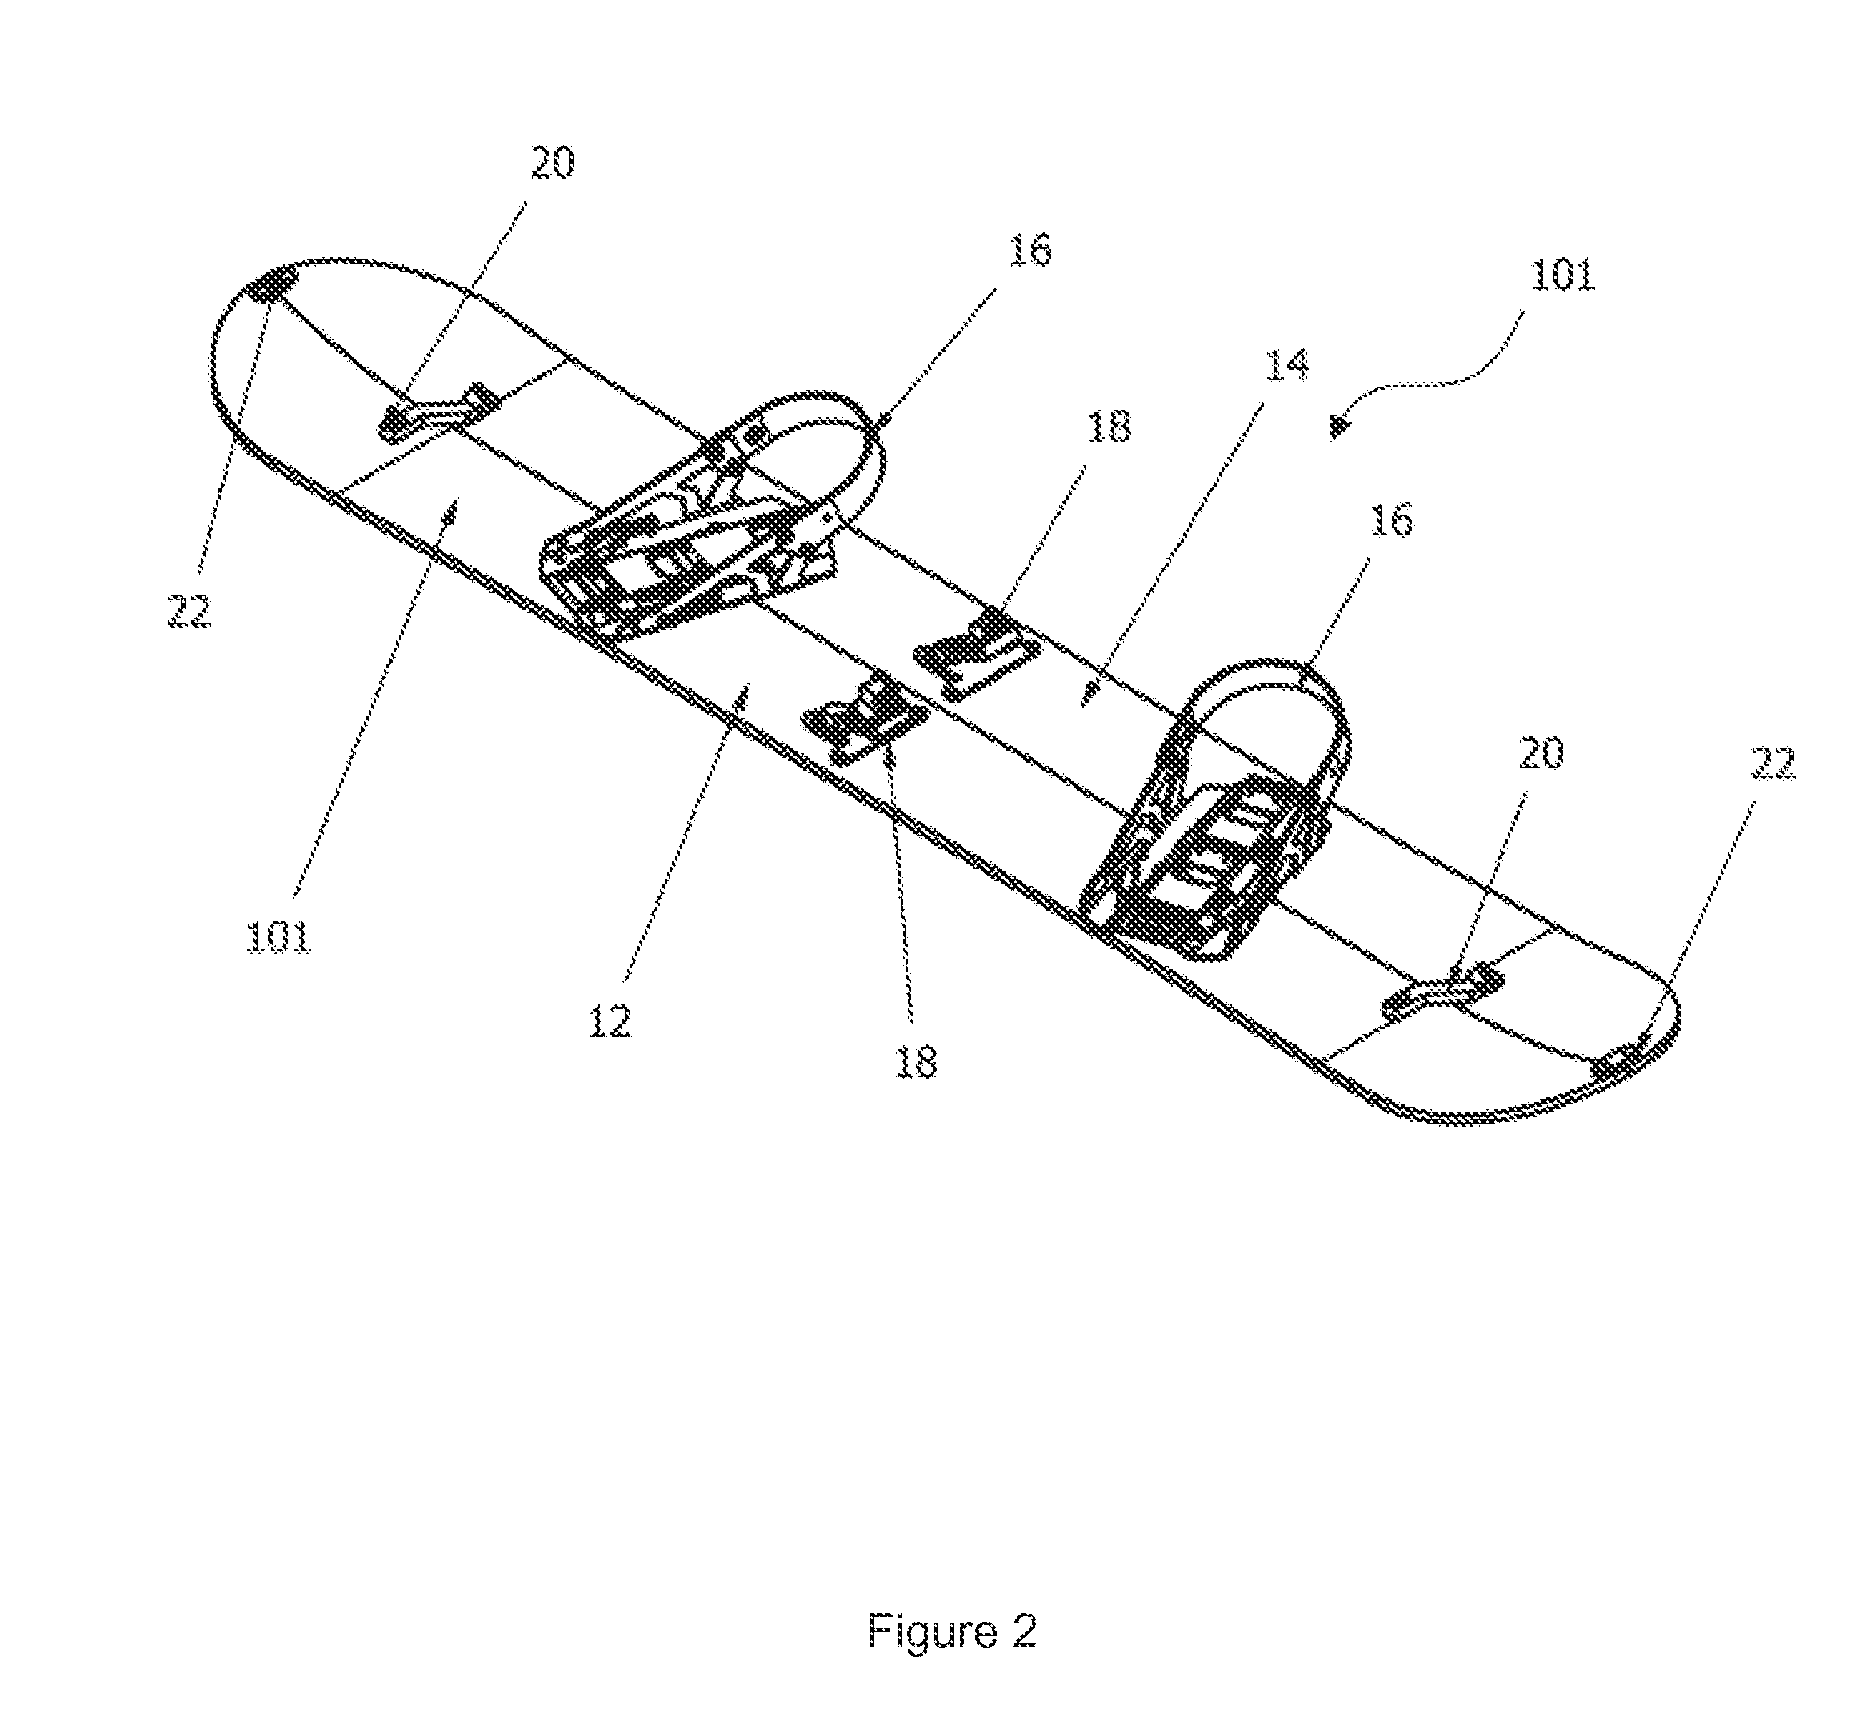 Splitboard binding apparatus